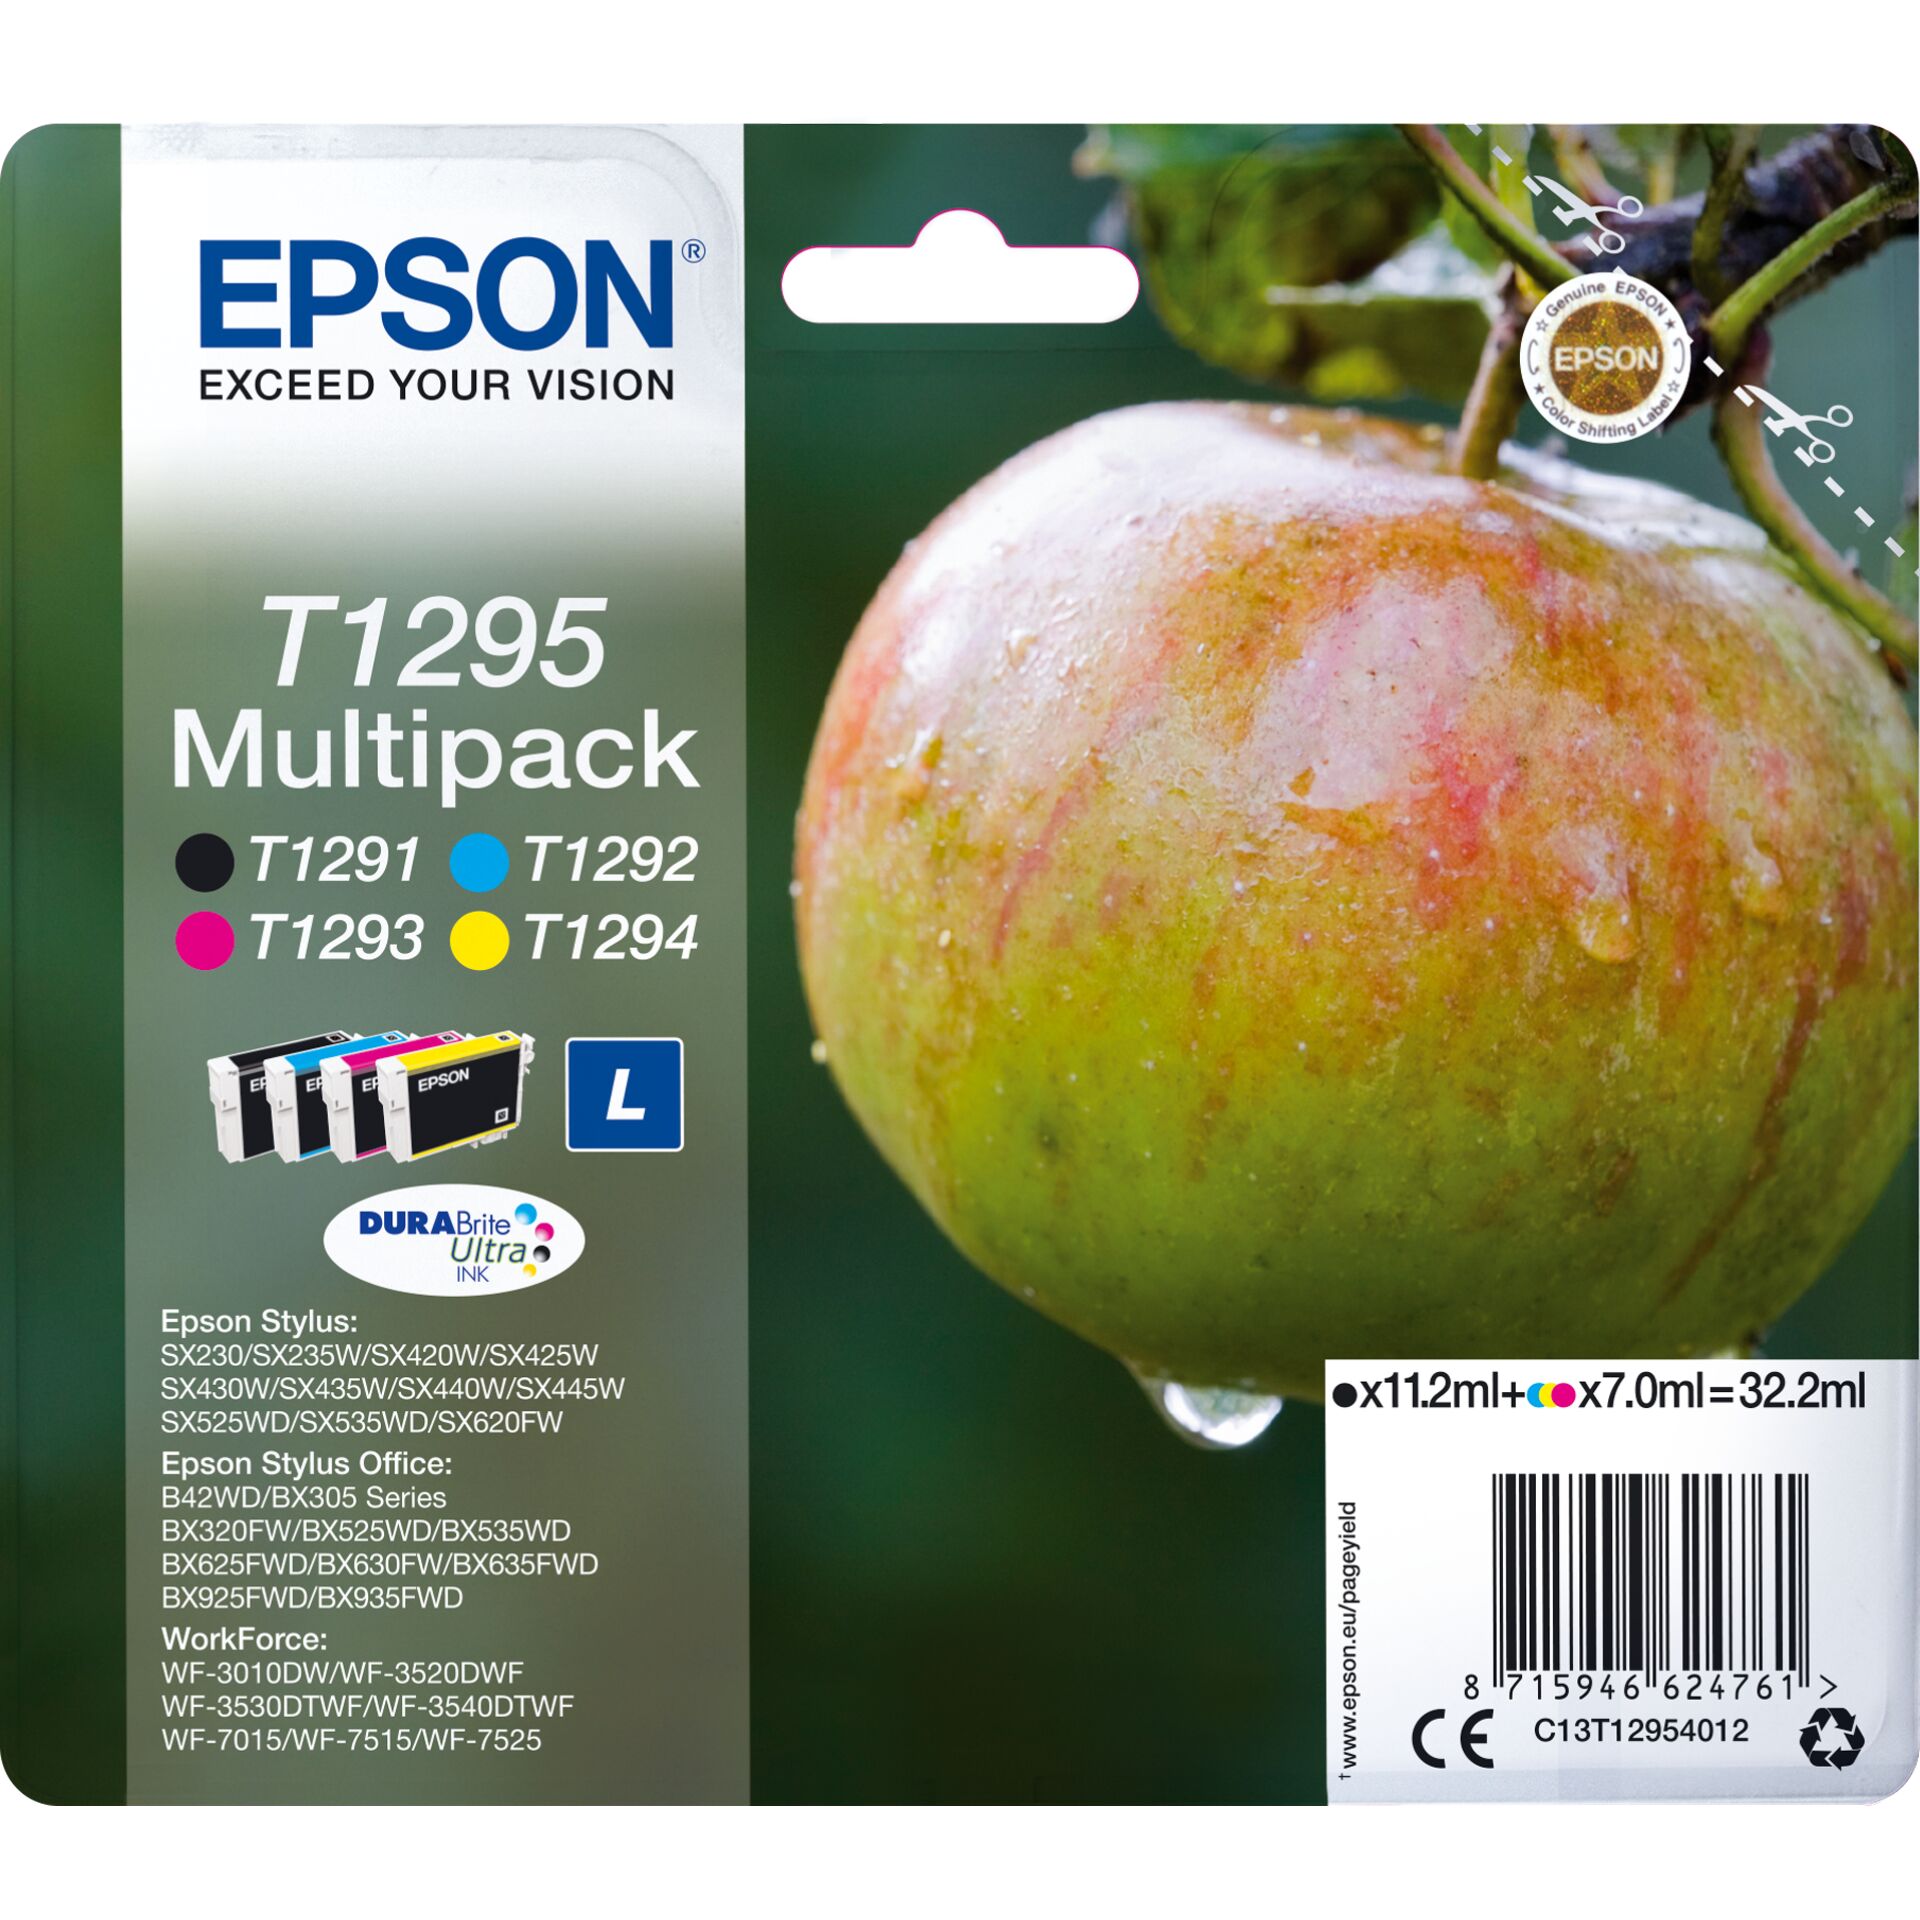 Epson T1295 Tinte Multipack cyan/magenta/gelb Original 11.2ml schwarz, je 7ml farbe